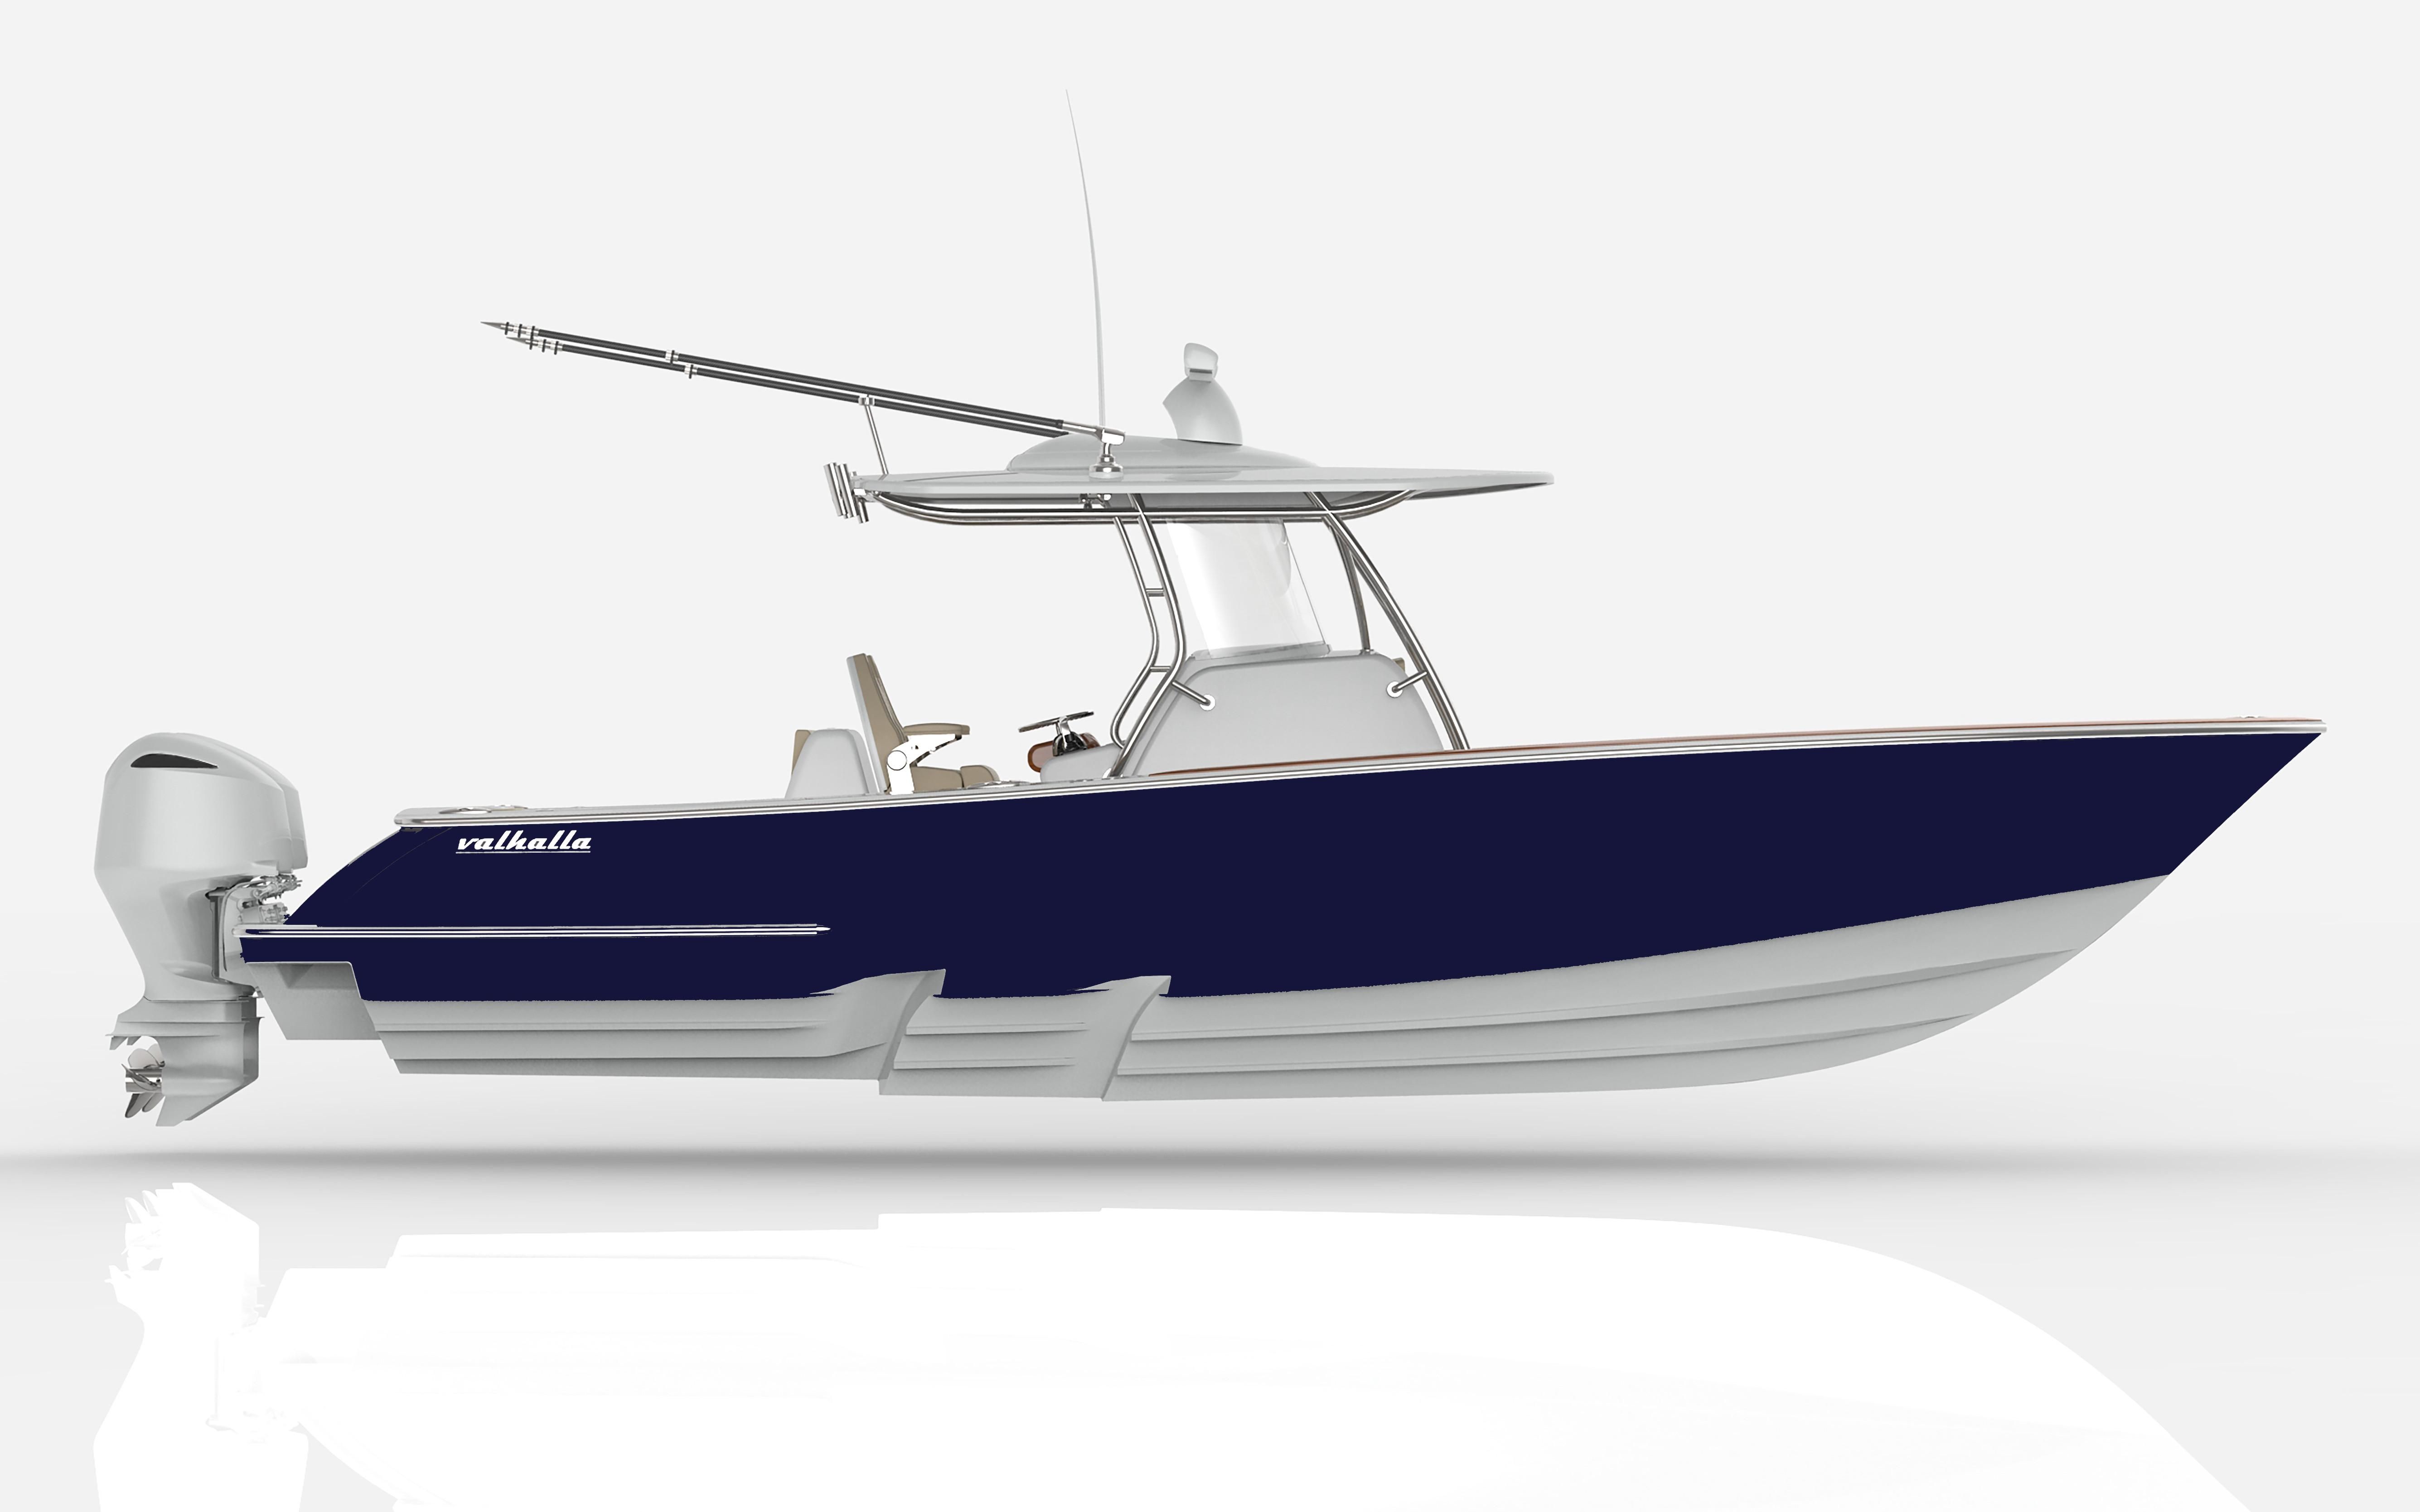 2021 Valhalla Boatworks V-33 Center Console for sale - YachtWorld